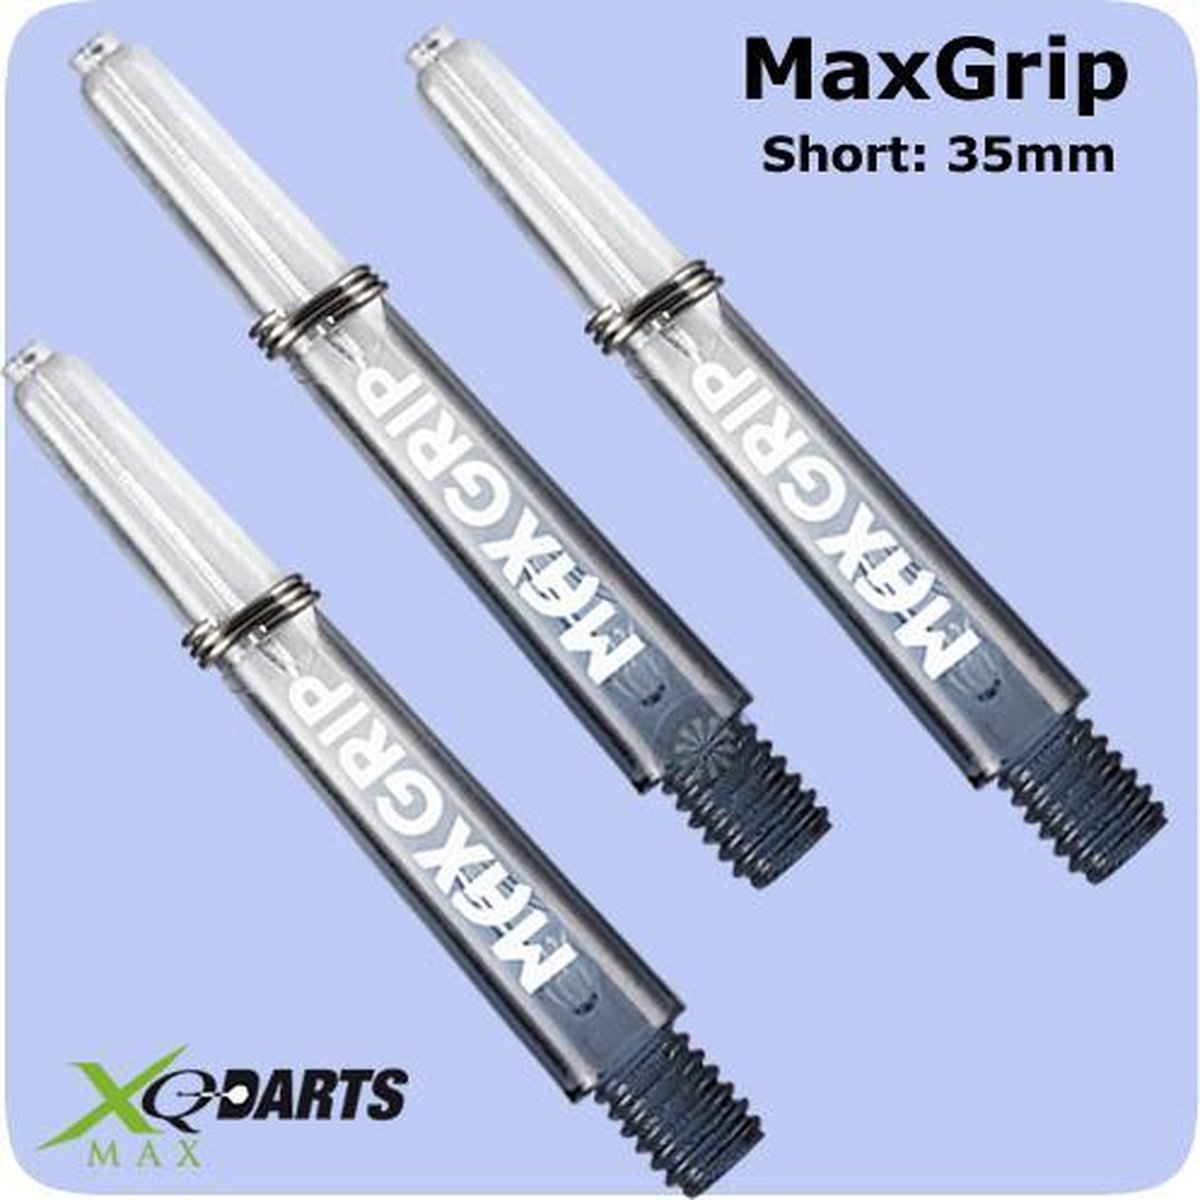 Dragon darts - Maxgrip - 3 sets (9 stuks) - dart shafts - zwart-doorzichtig - darts shafts - short